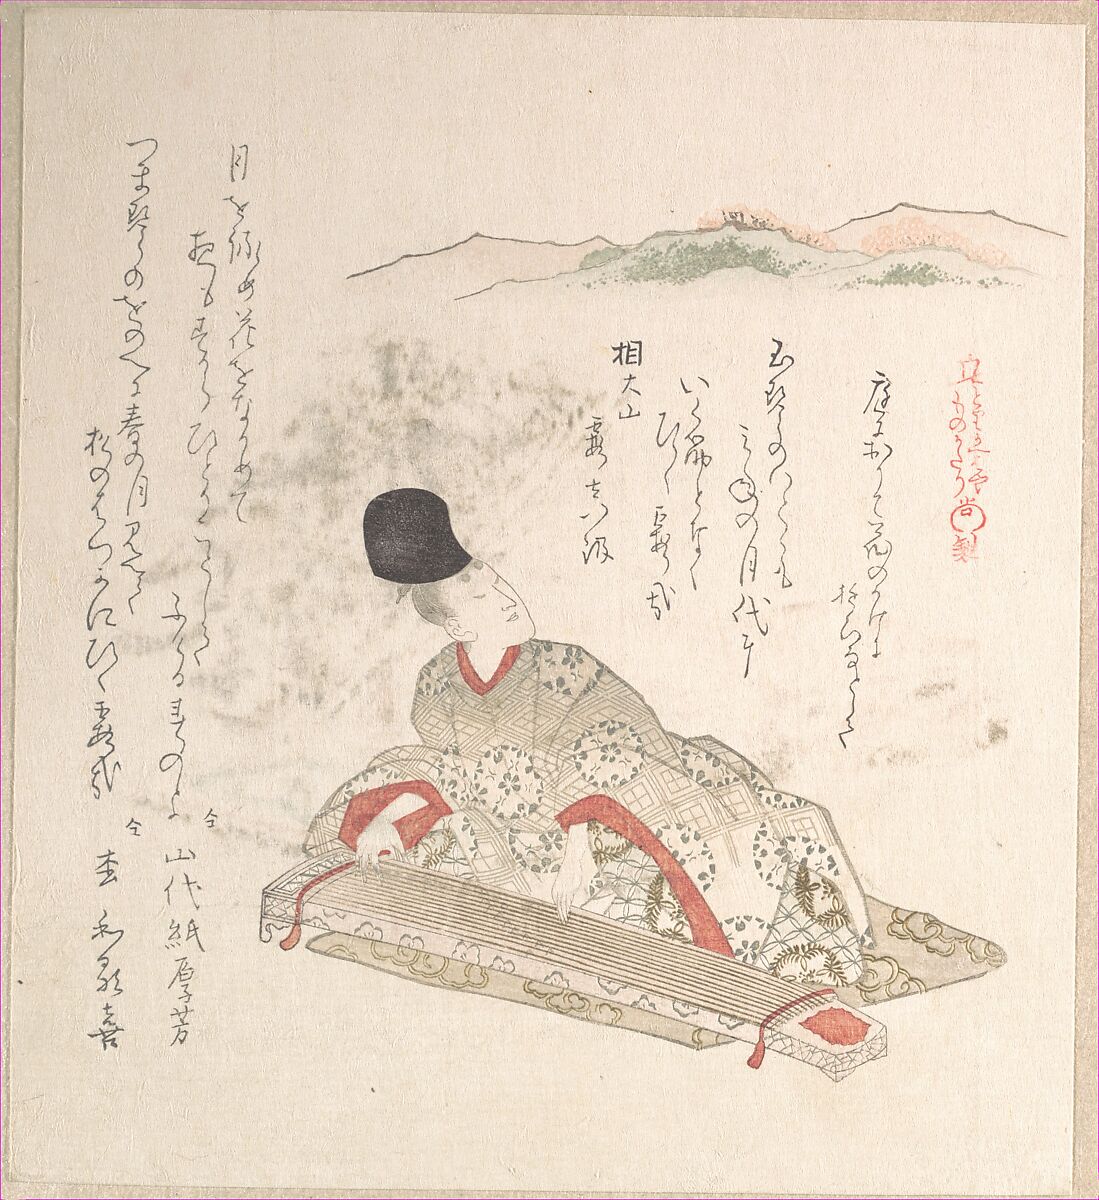 Young Nobleman Playing Koto (Harp), Kubo Shunman (Japanese, 1757–1820), Woodblock print (surimono); ink and color on paper, Japan 